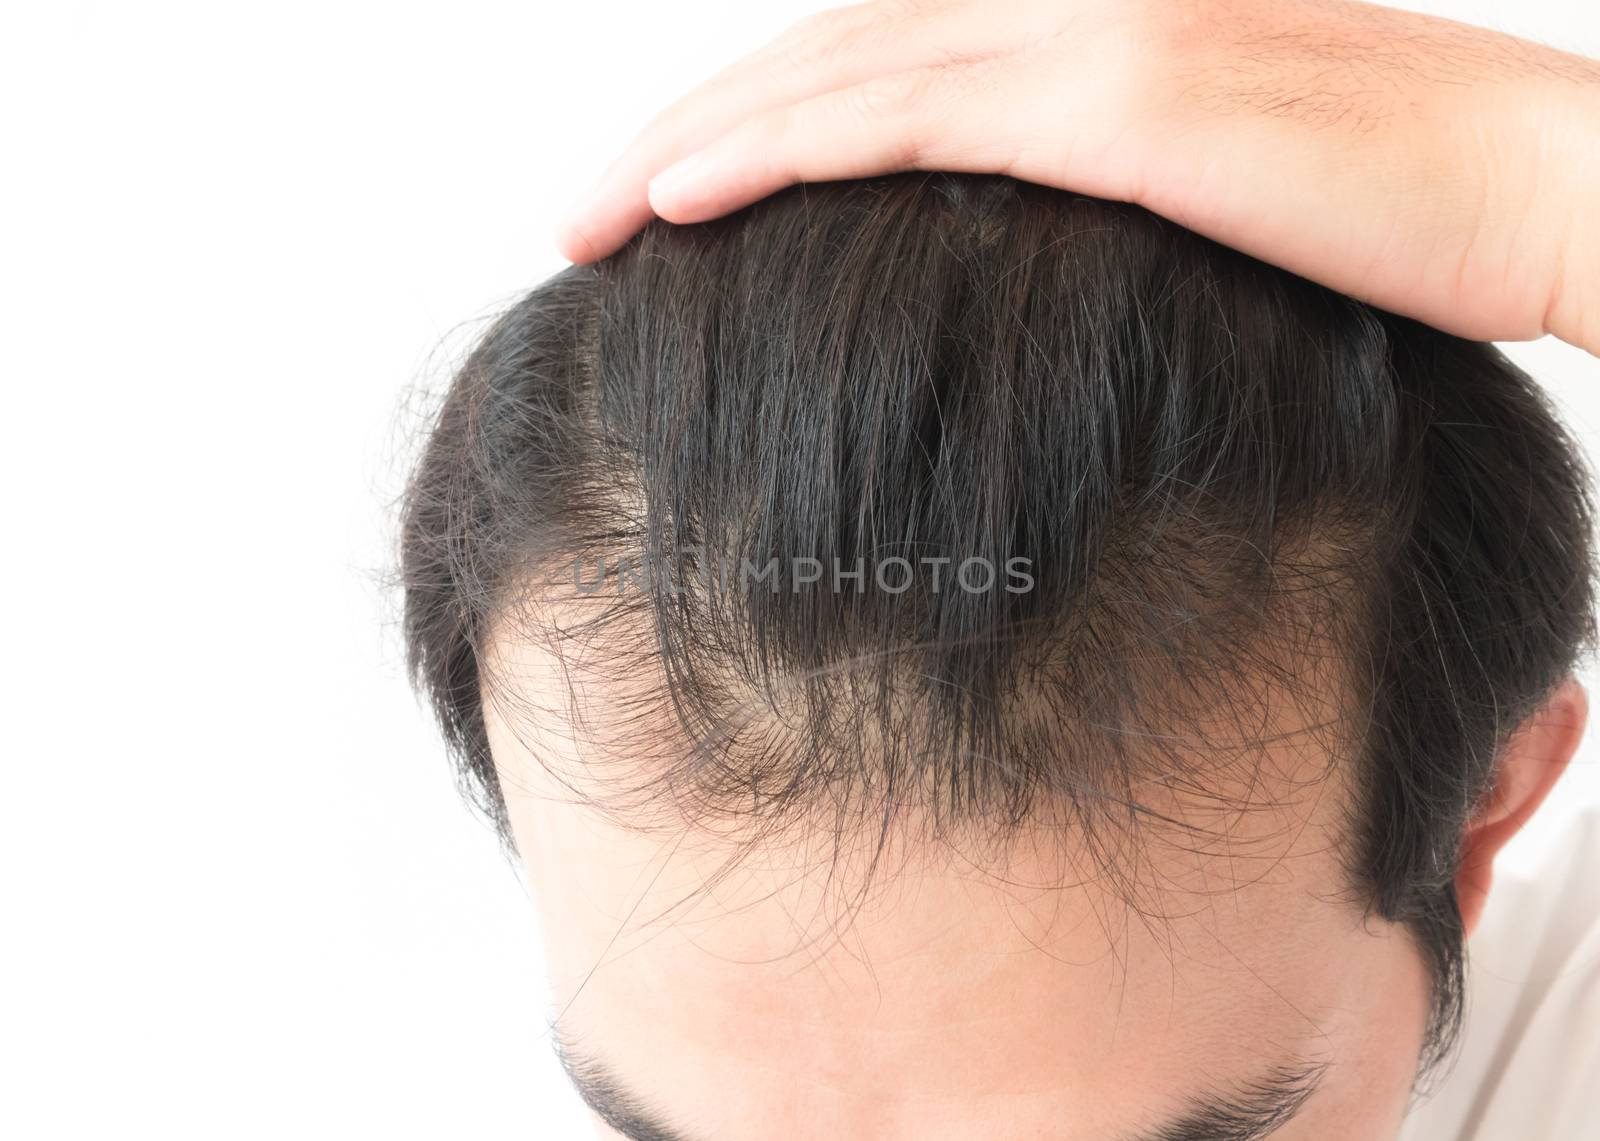 Young man serious hair loss problem for health care shampoo by pt.pongsak@gmail.com